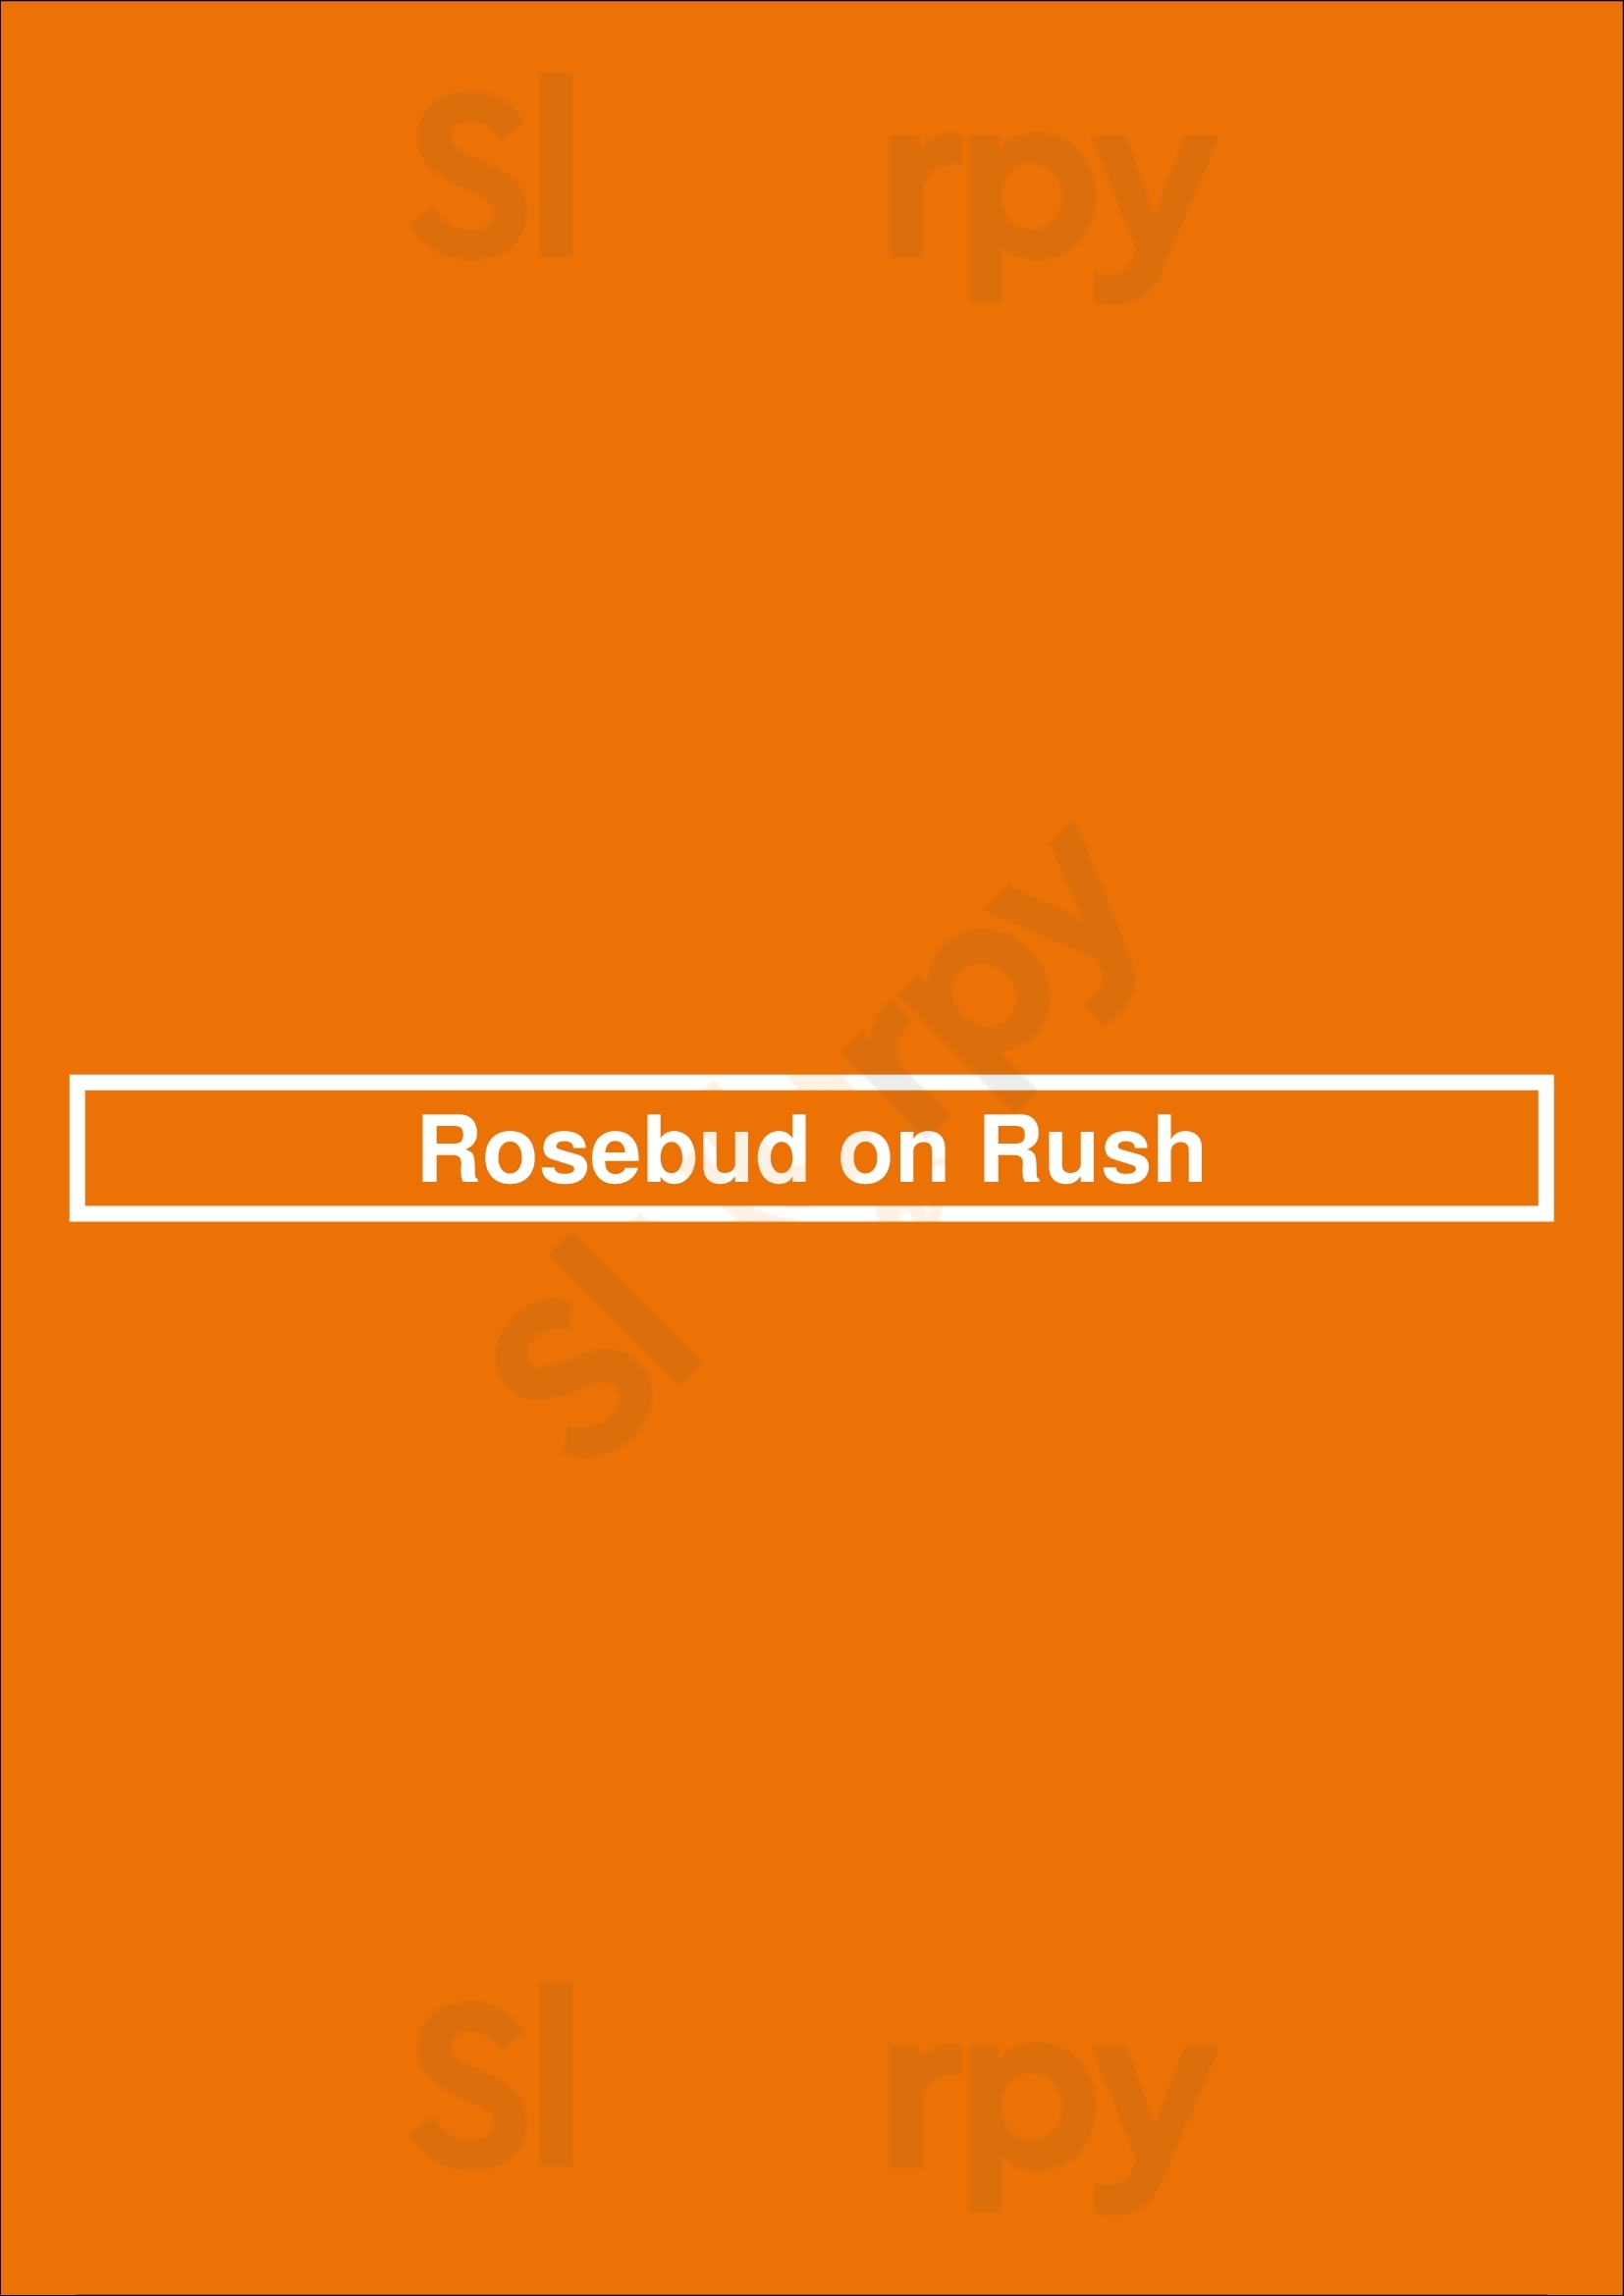 Rosebud On Rush Chicago Menu - 1